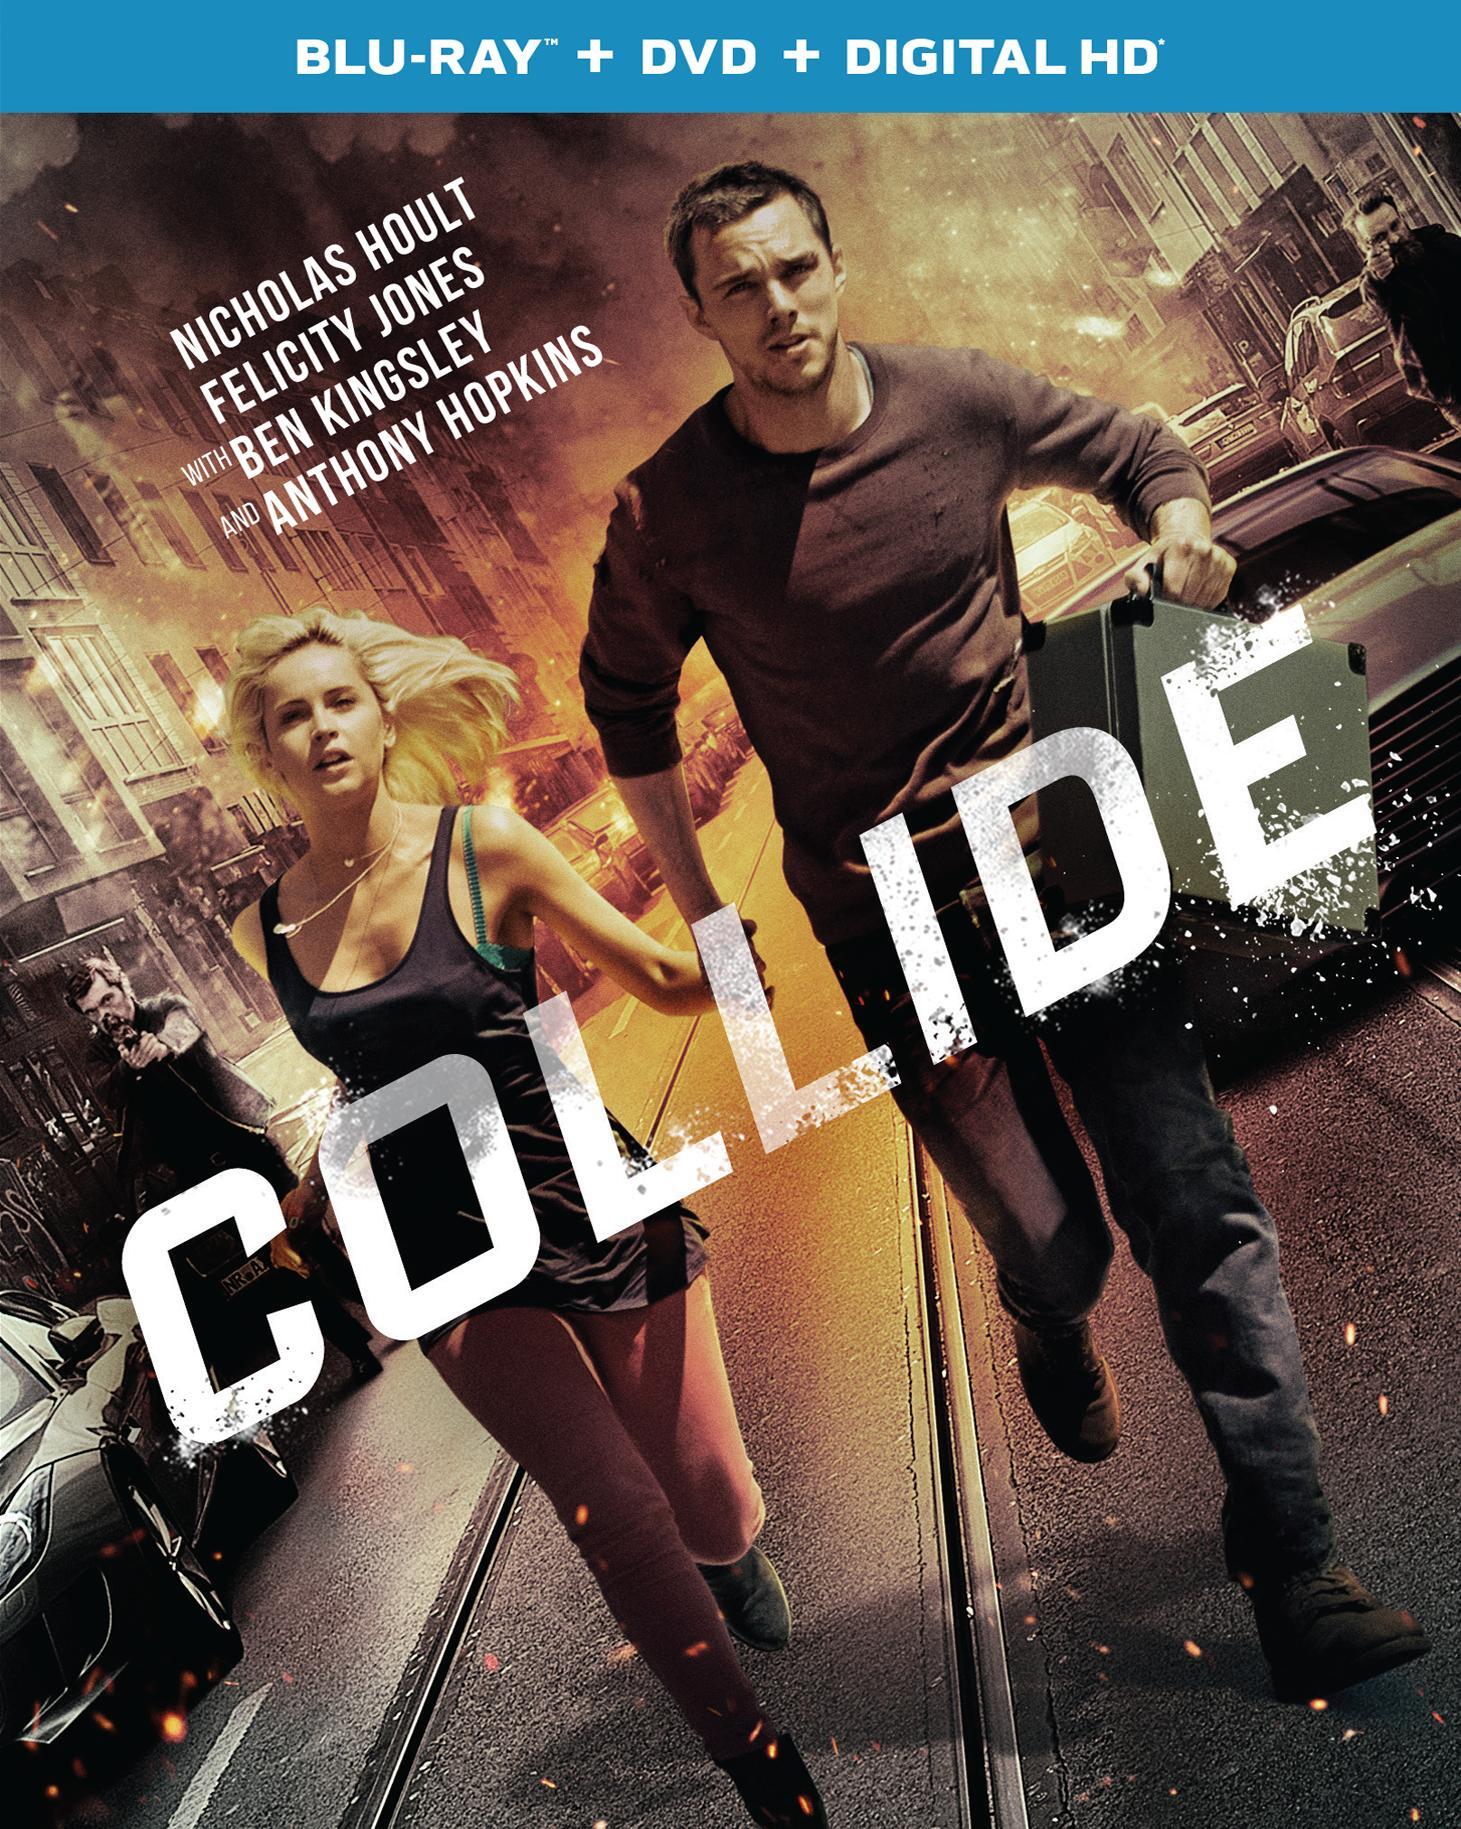 Collide (DVD + Digital) - Blu-ray [ 2017 ]  - Action Movies On Blu-ray - Movies On GRUV